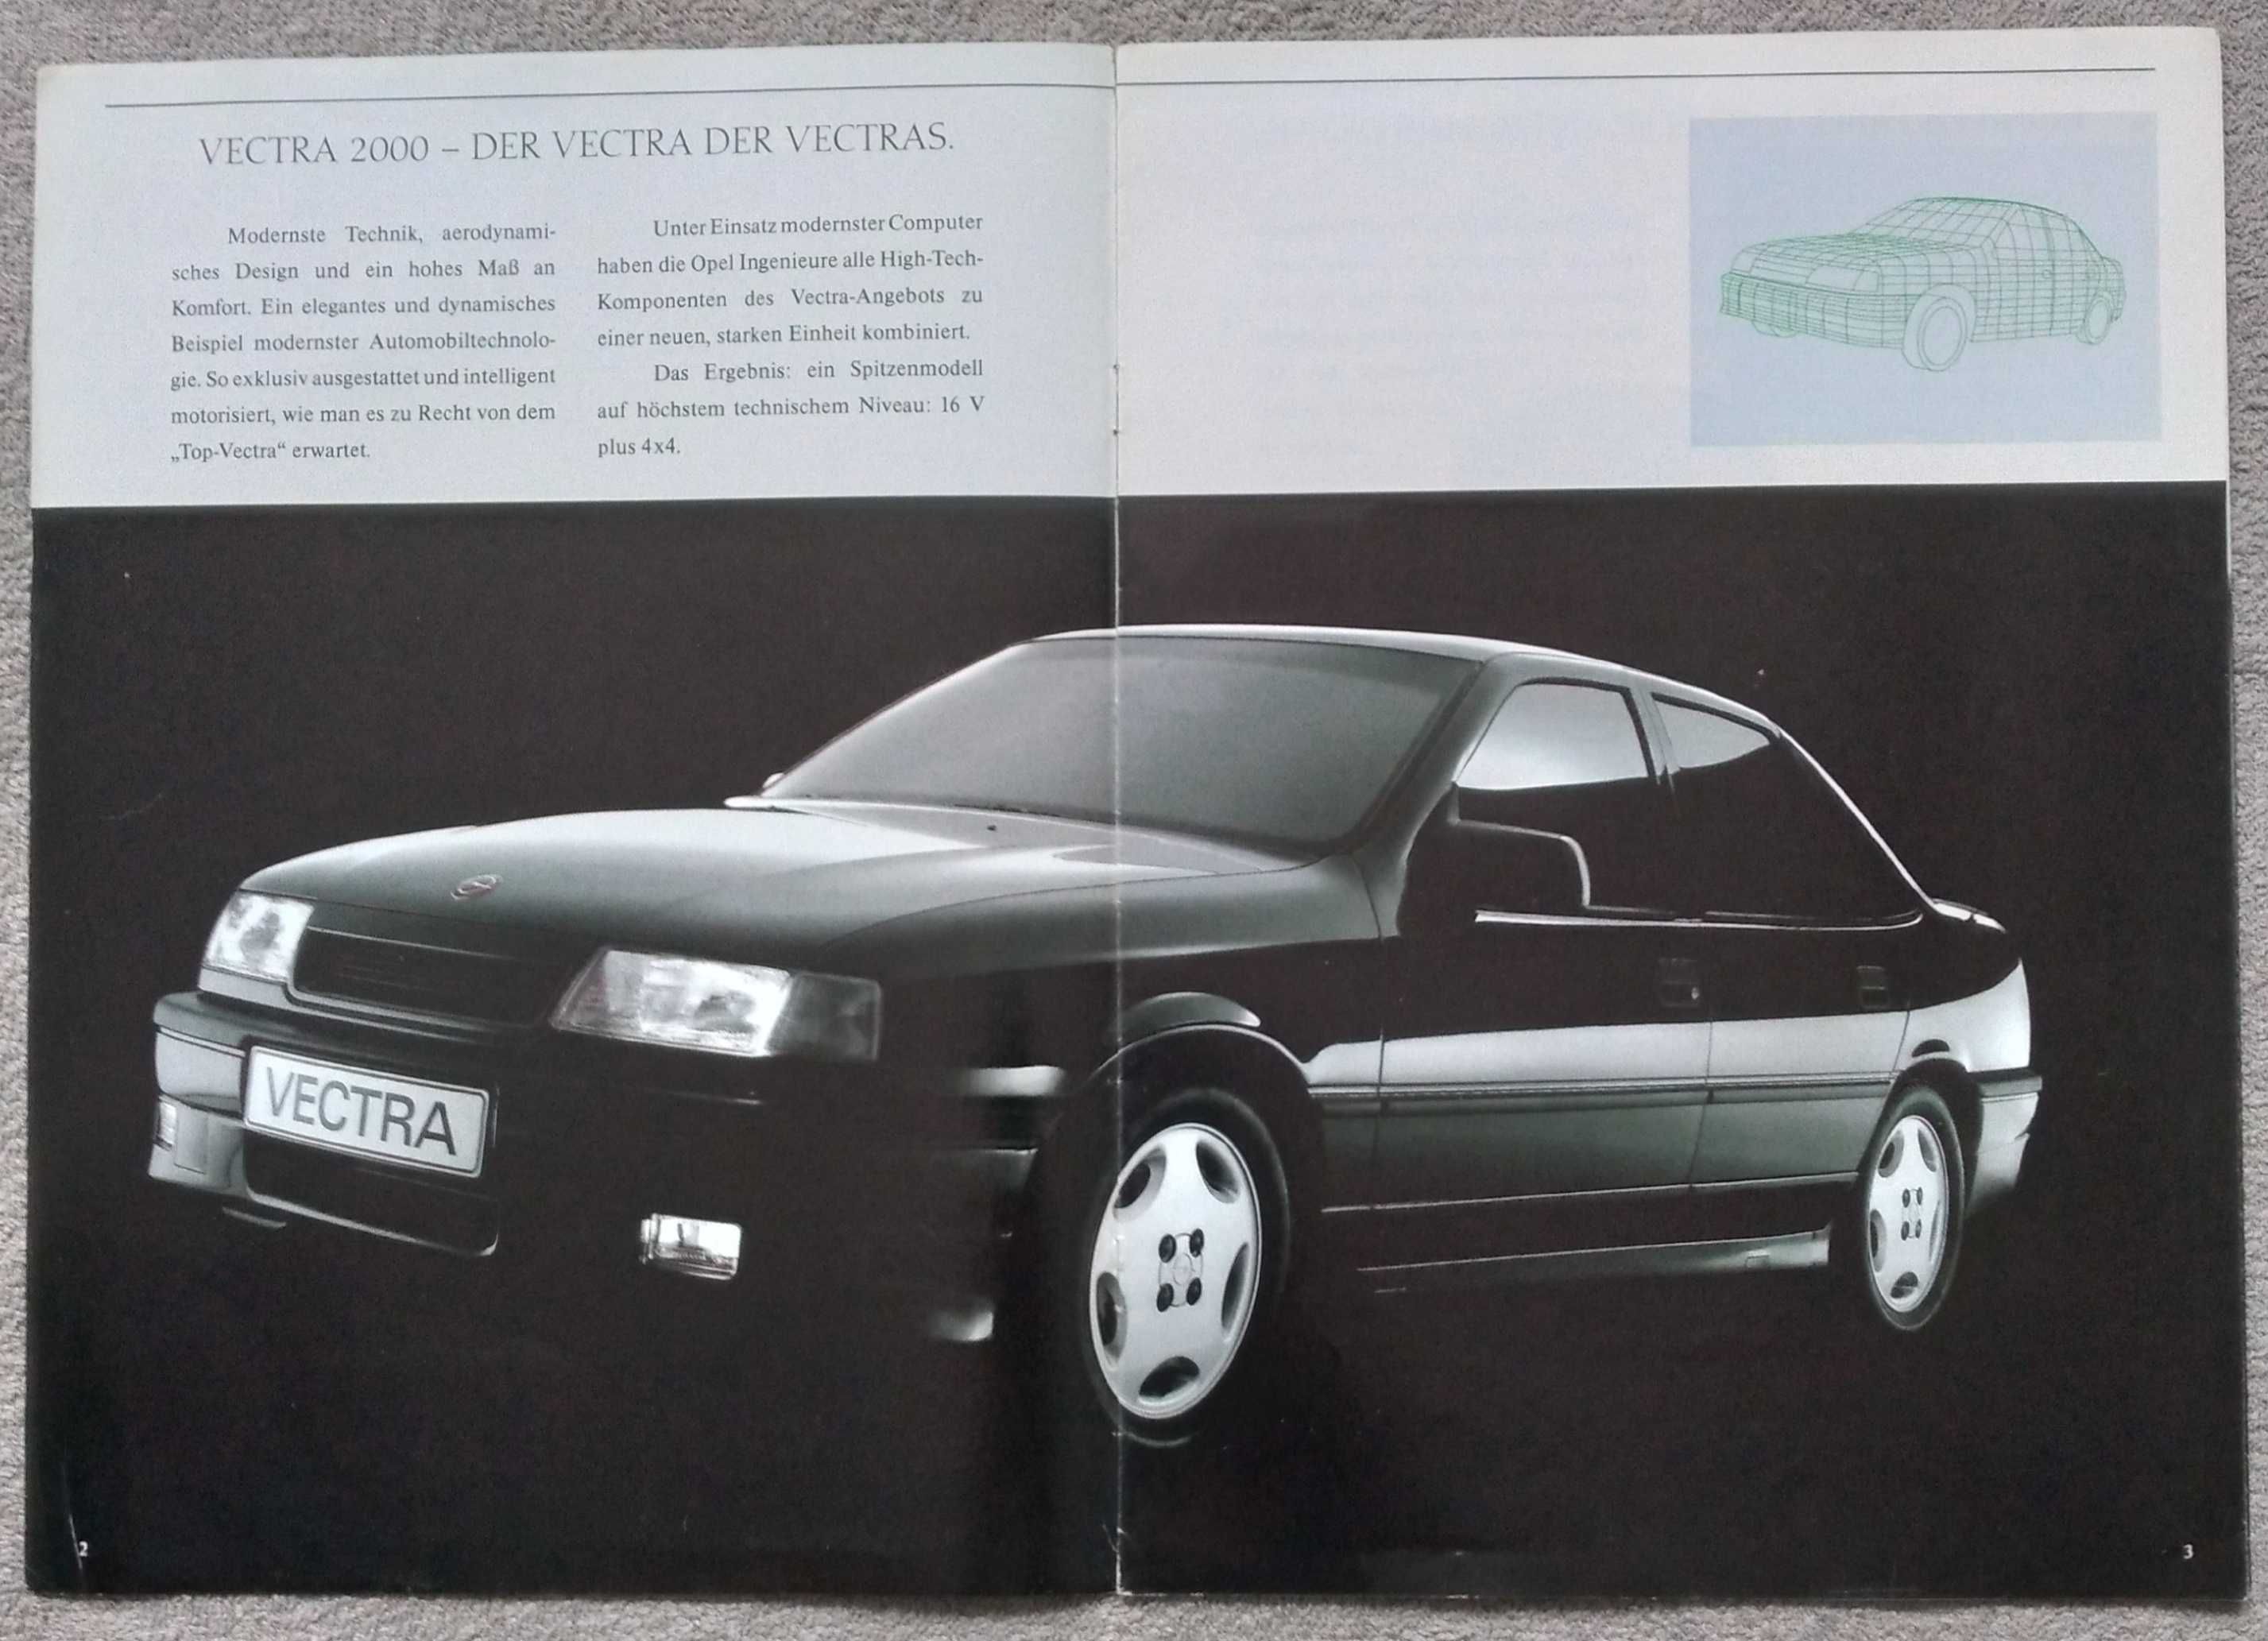 Prospekt Opel Vectra 2000 rok 1989